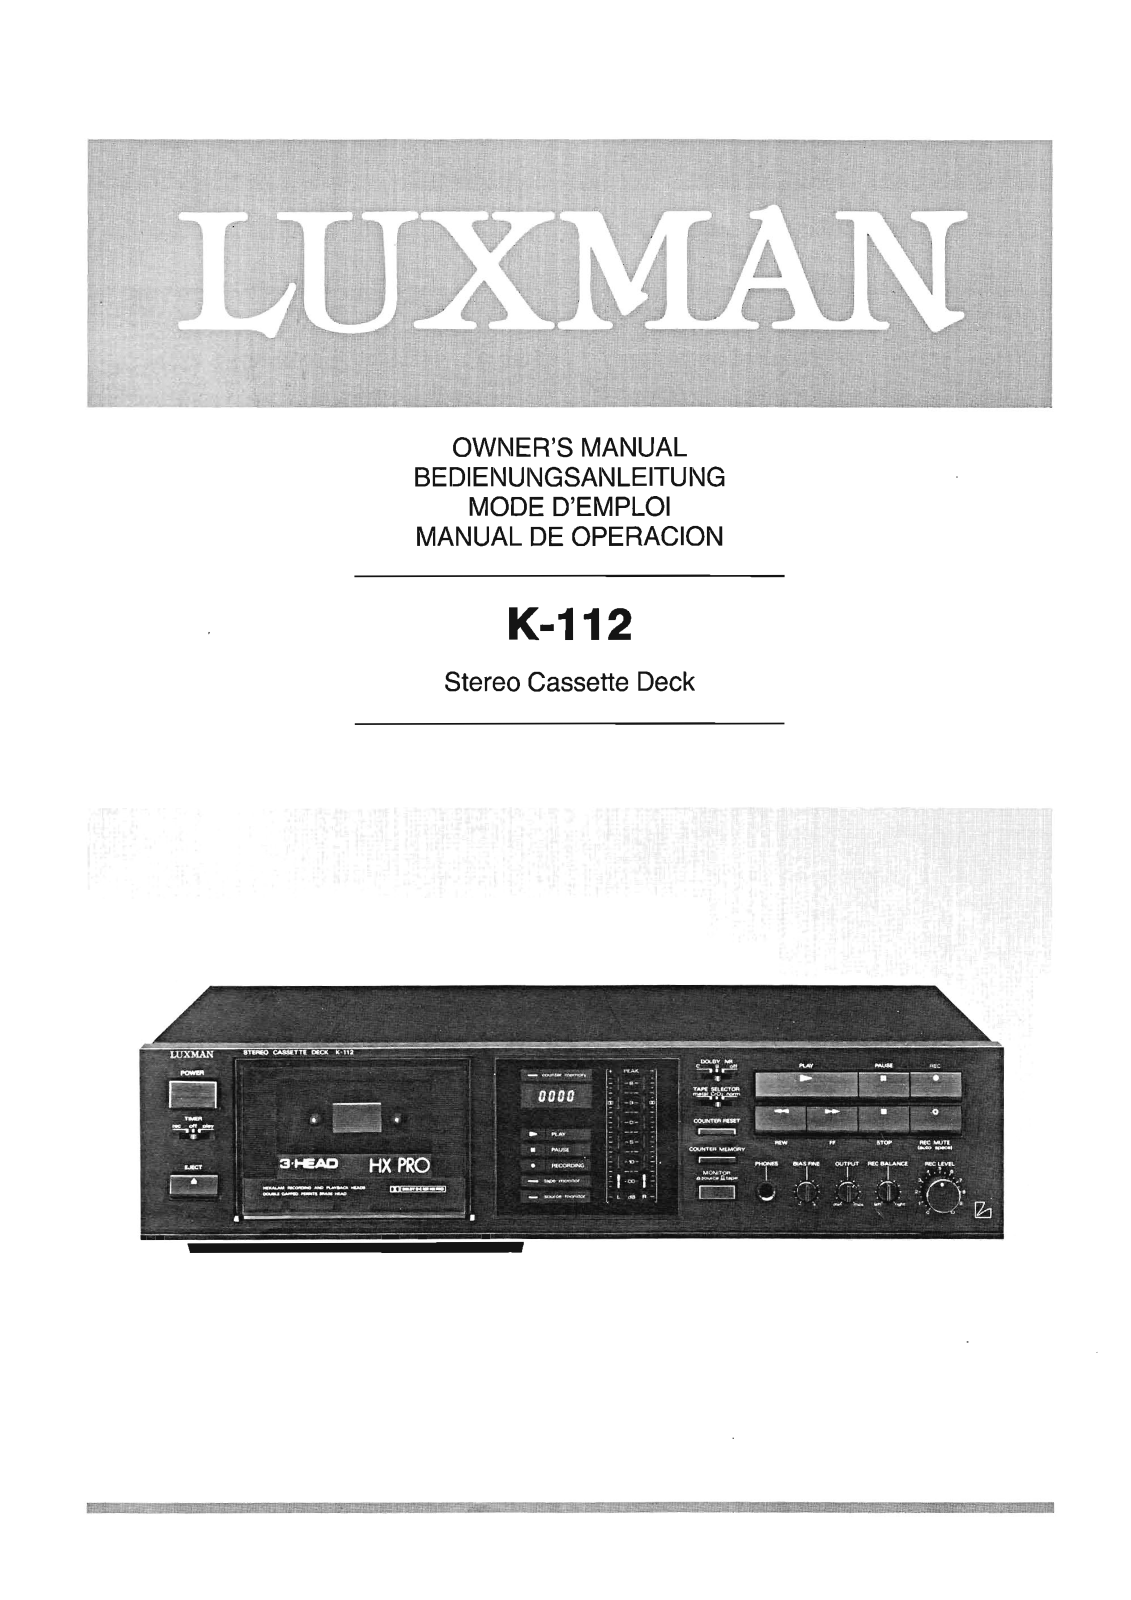 Luxman K-112 Owners Manual